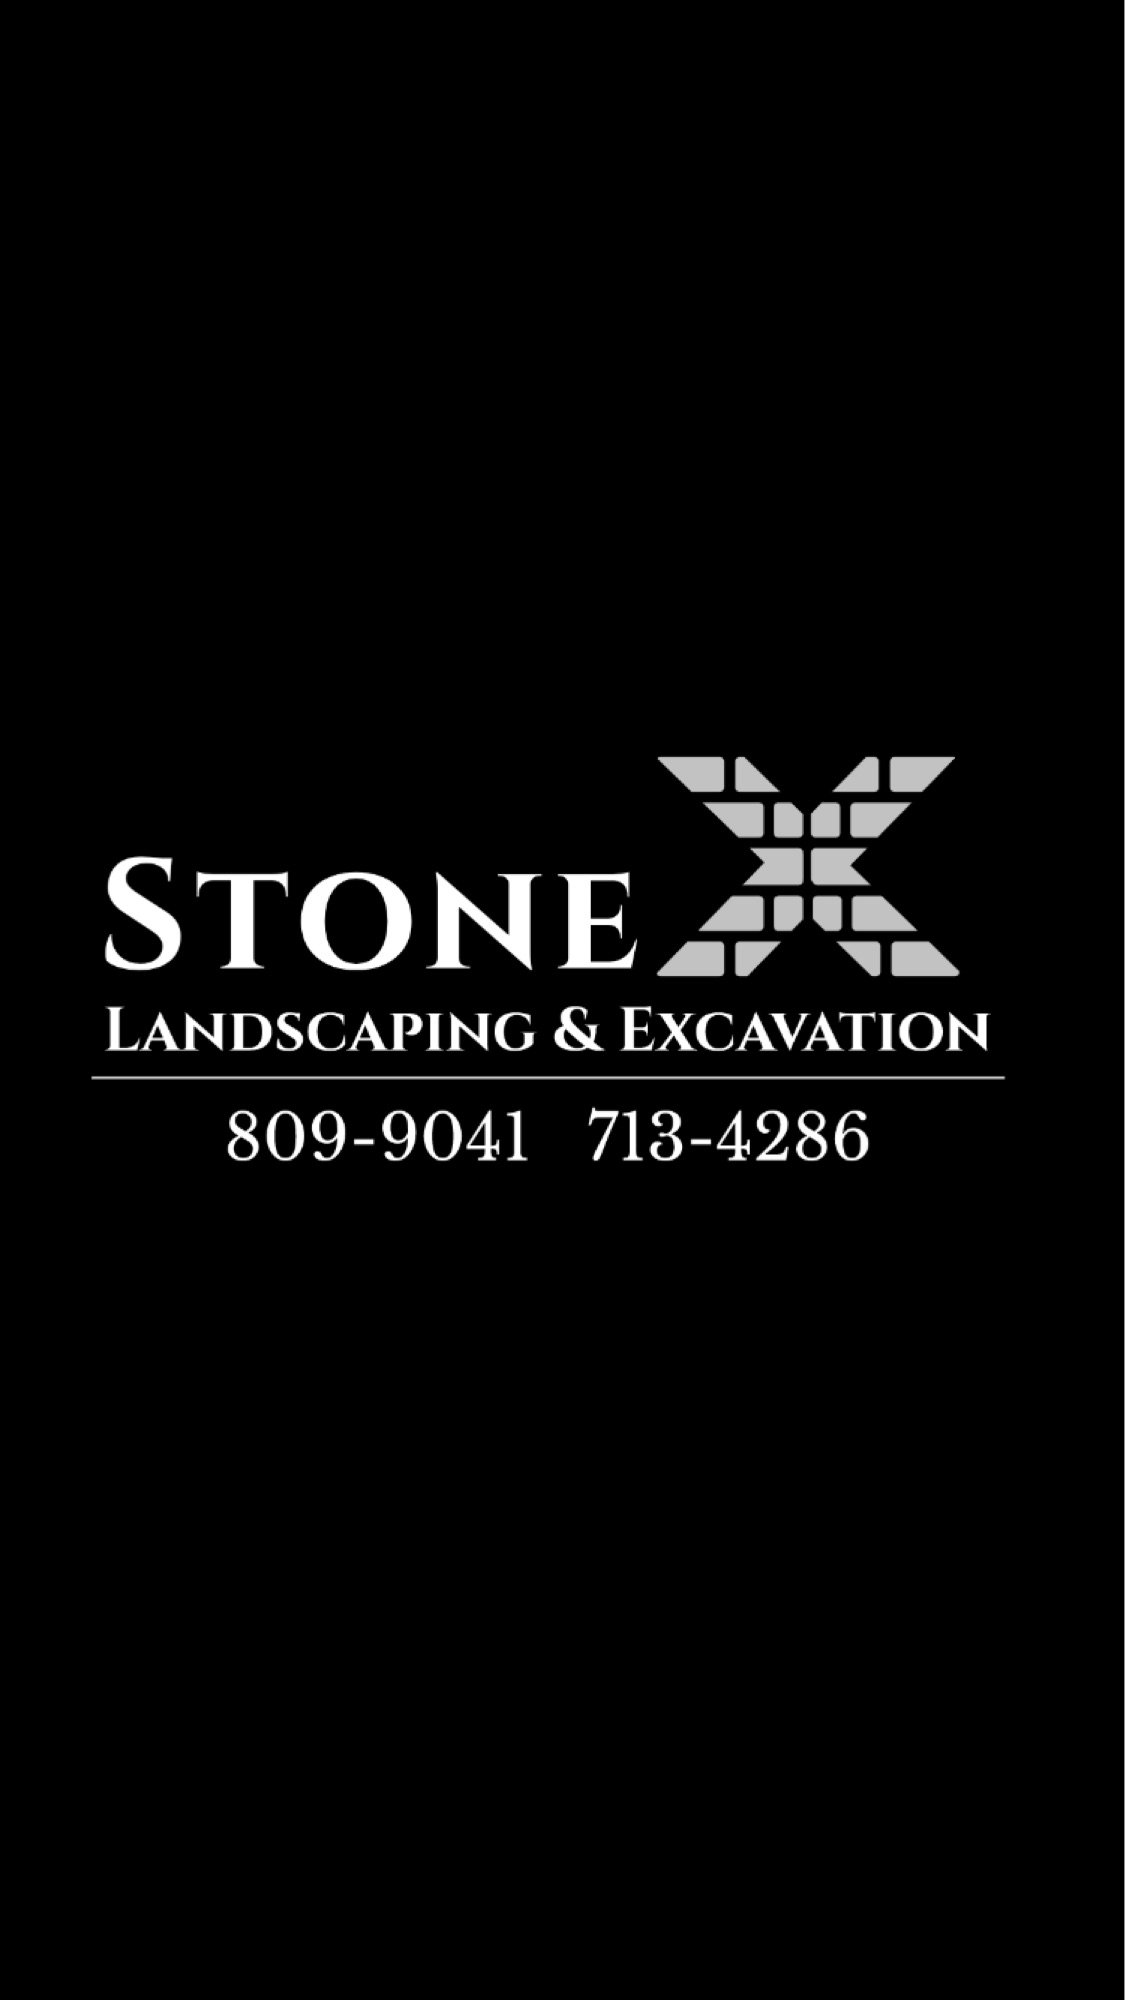 Stone X Landscaping & Excavation Logo